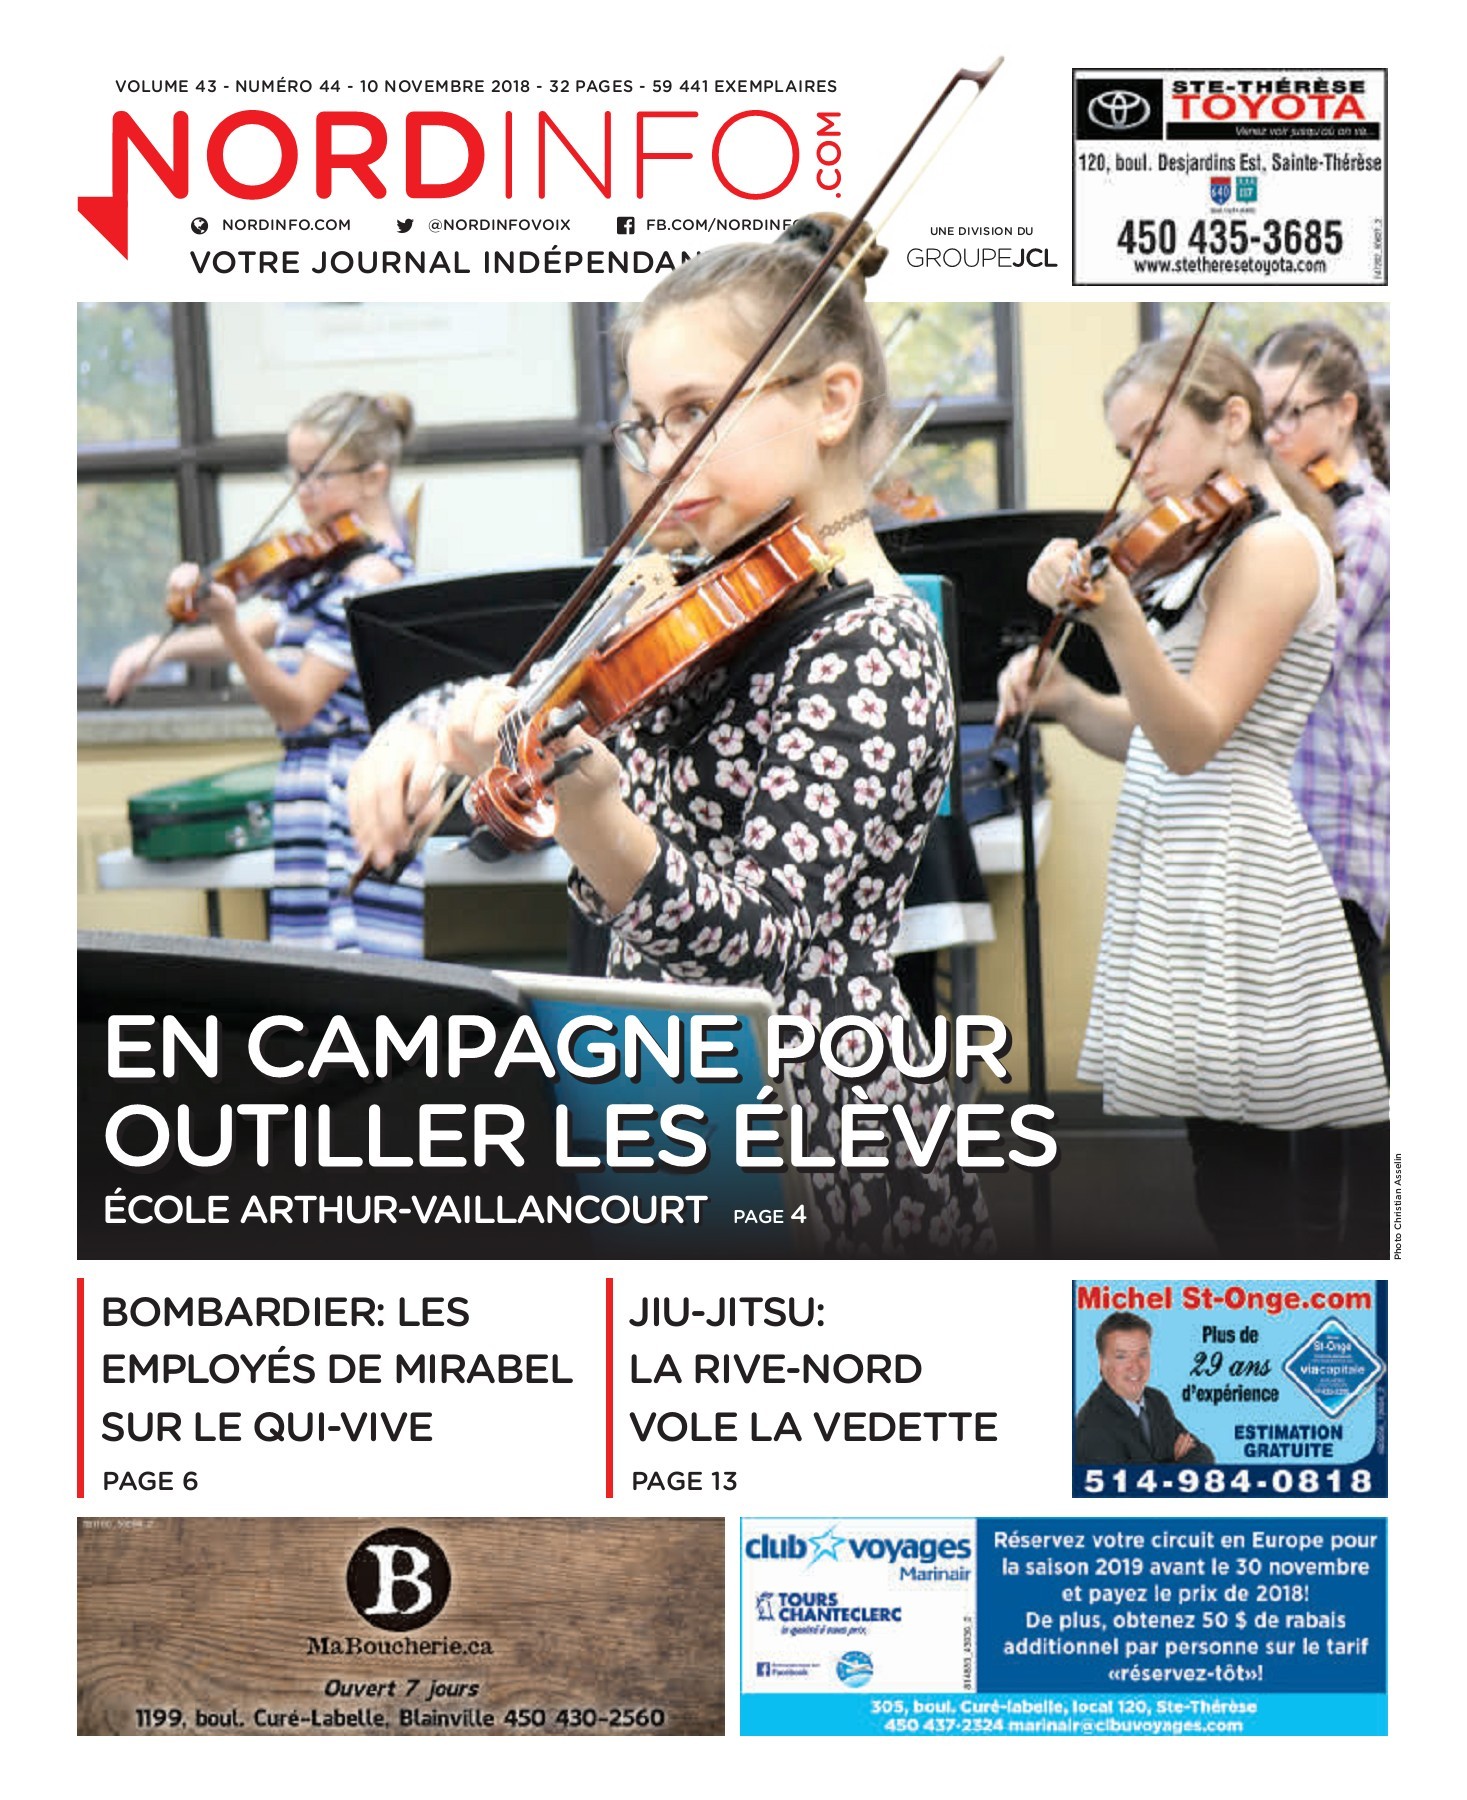 Page couverture Nord-info, 10 novembre 2018